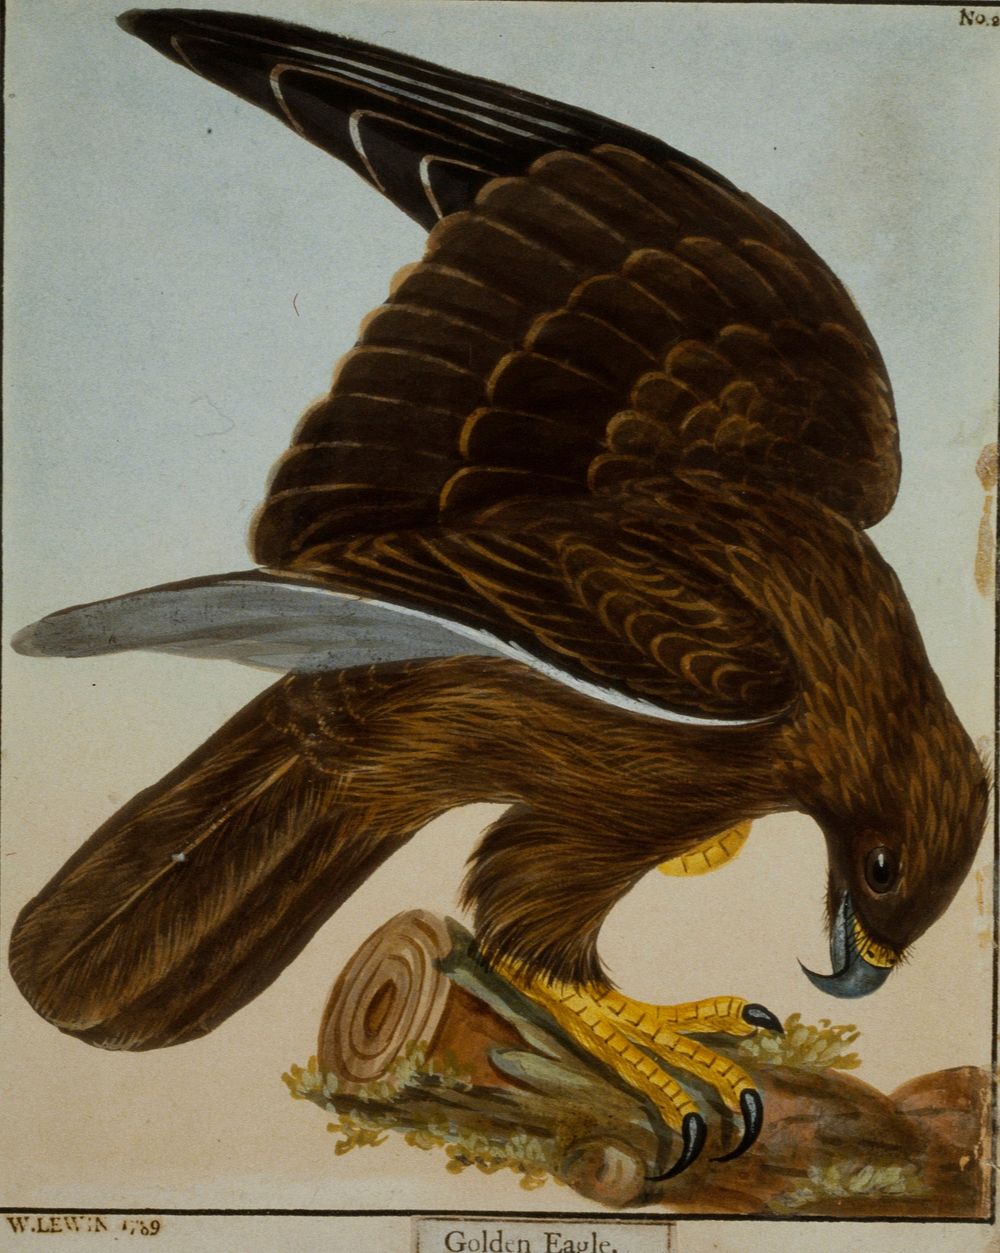 Golden Eagle, No. 2. Original from the Minneapolis Institute of Art.